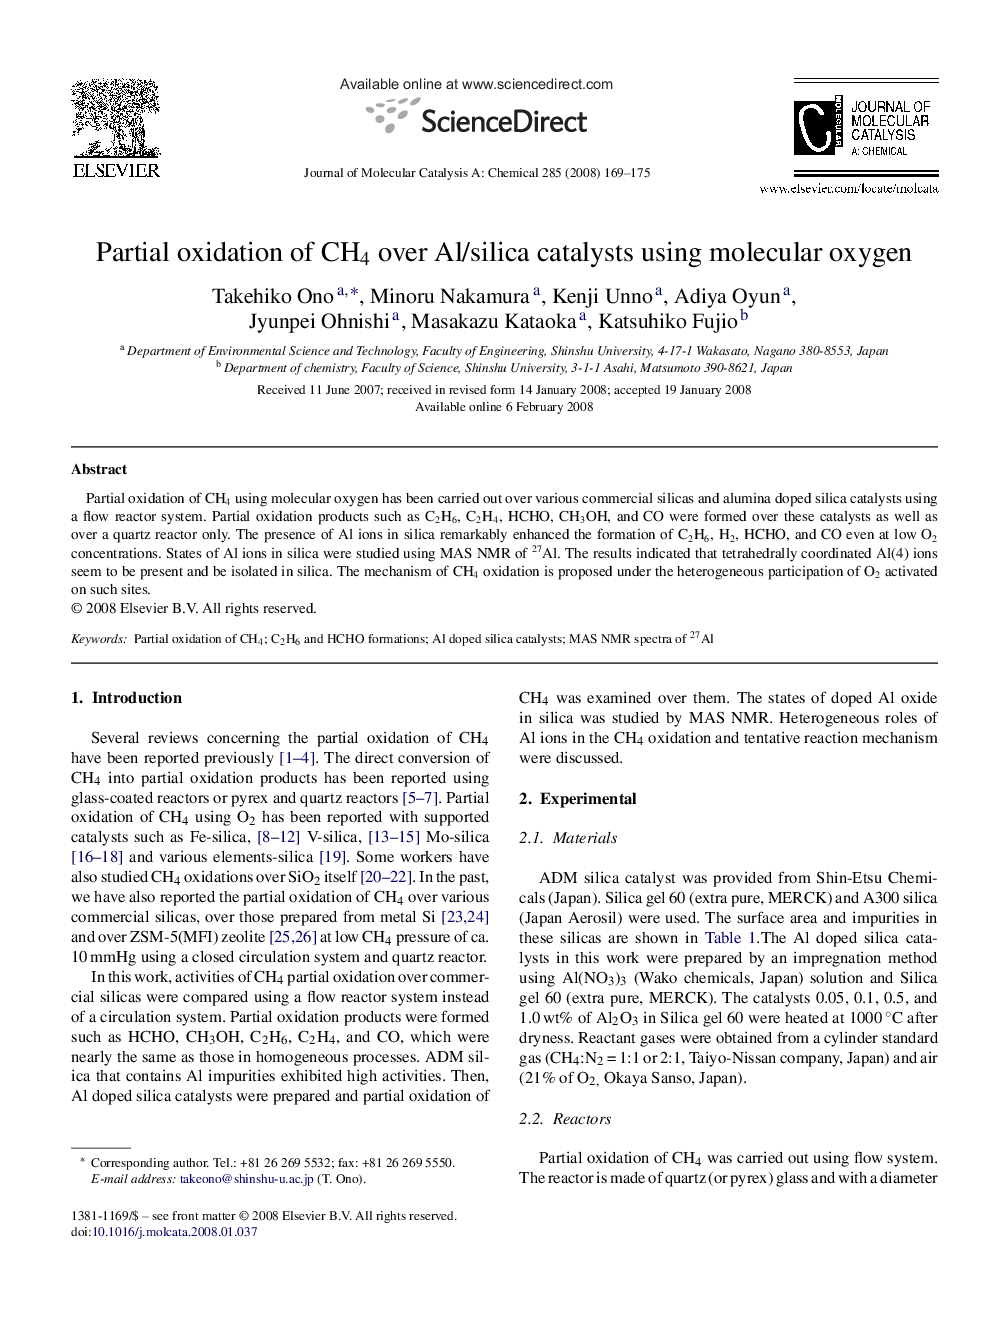 Partial oxidation of CH4 over Al/silica catalysts using molecular oxygen